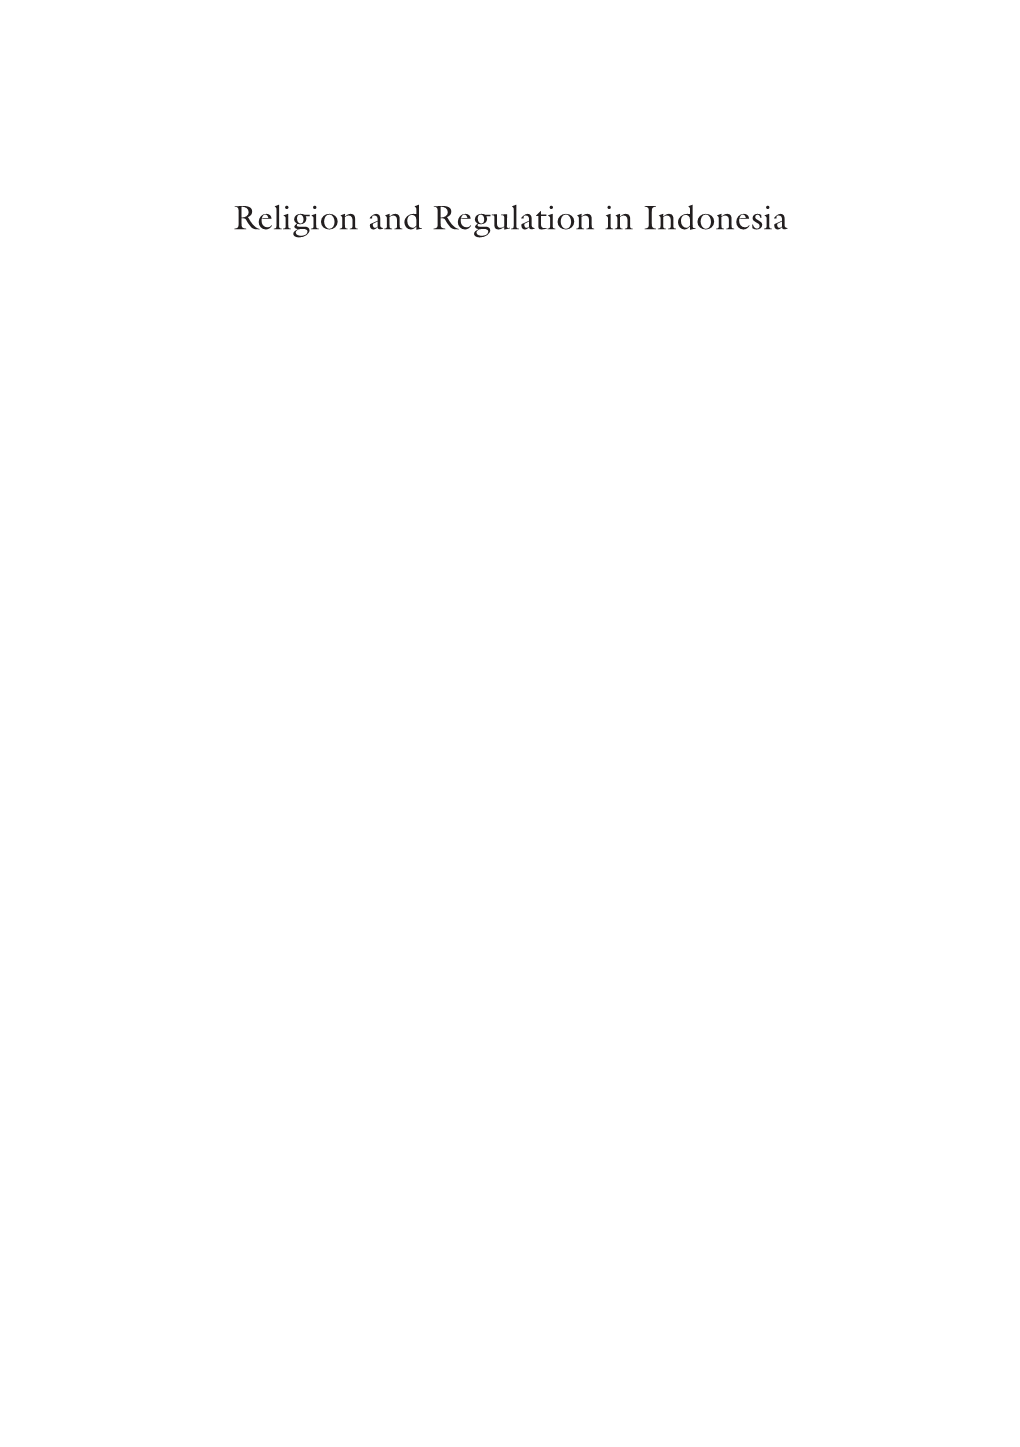 Religion and Regulation in Indonesia Ismatu Ropi Religion and Regulation in Indonesia Ismatu Ropi UIN Jakarta Indonesia South Tangerang, Indonesia